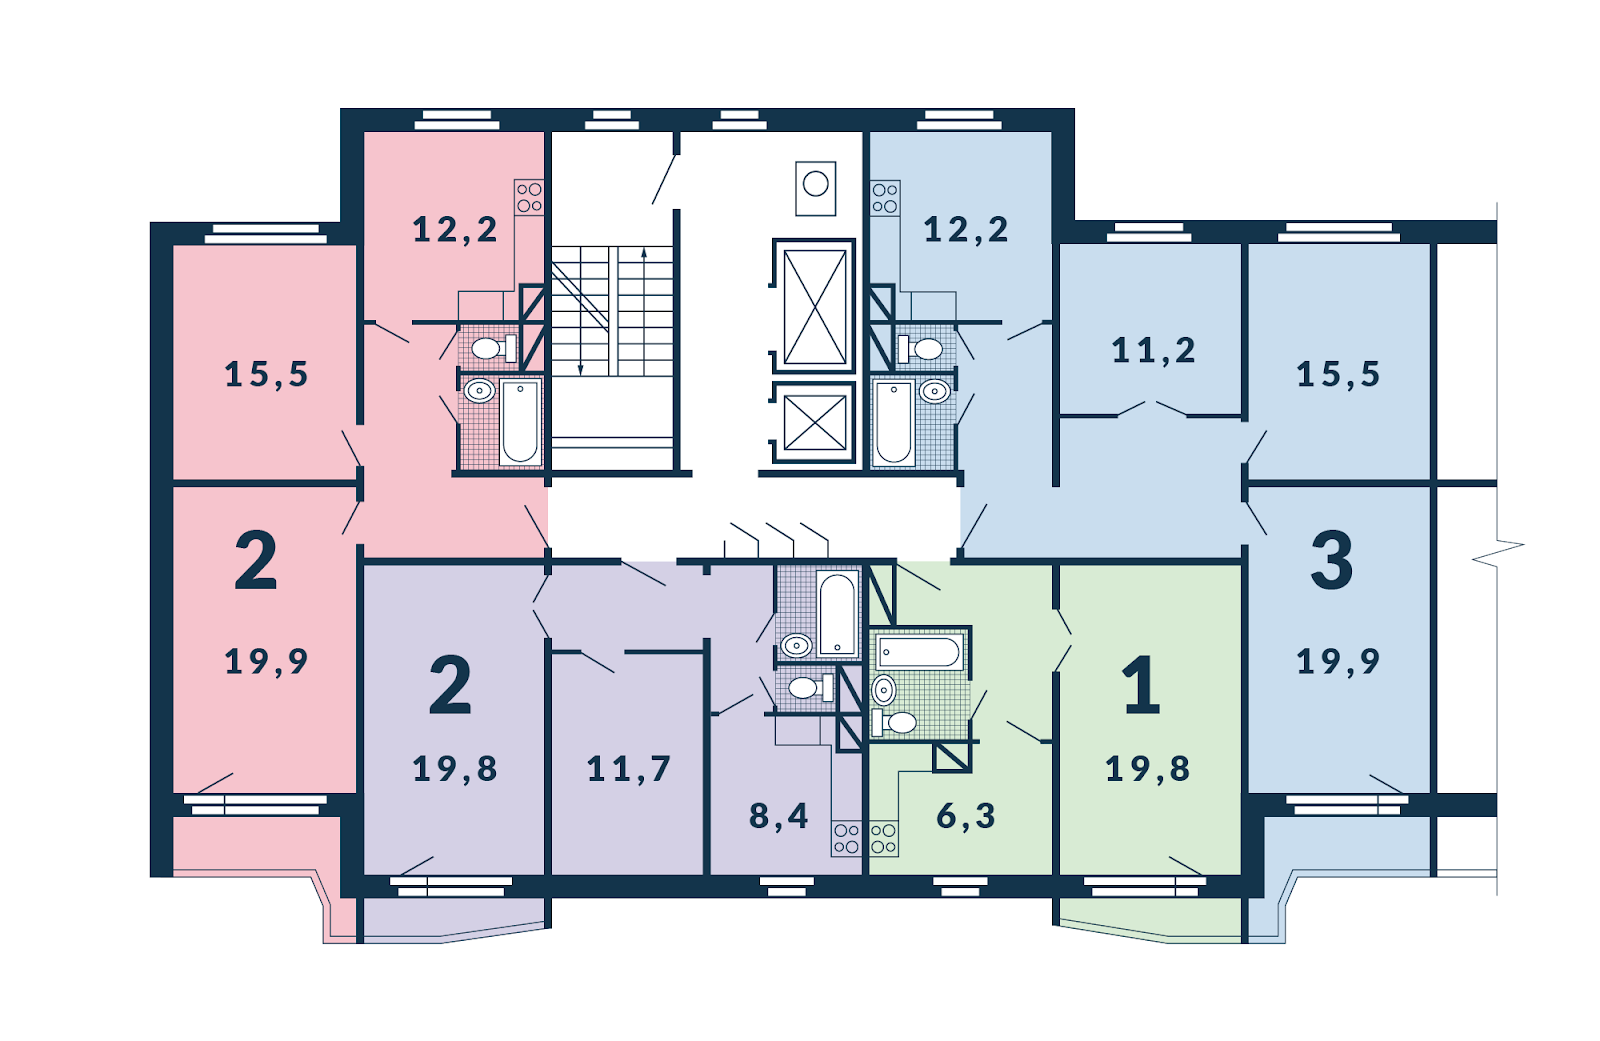 Схема этажа дома типа П-44<br>Источник:&nbsp;https://domgadalki.ru/foto/planirovka-kvartir-p-44-s-razmerami